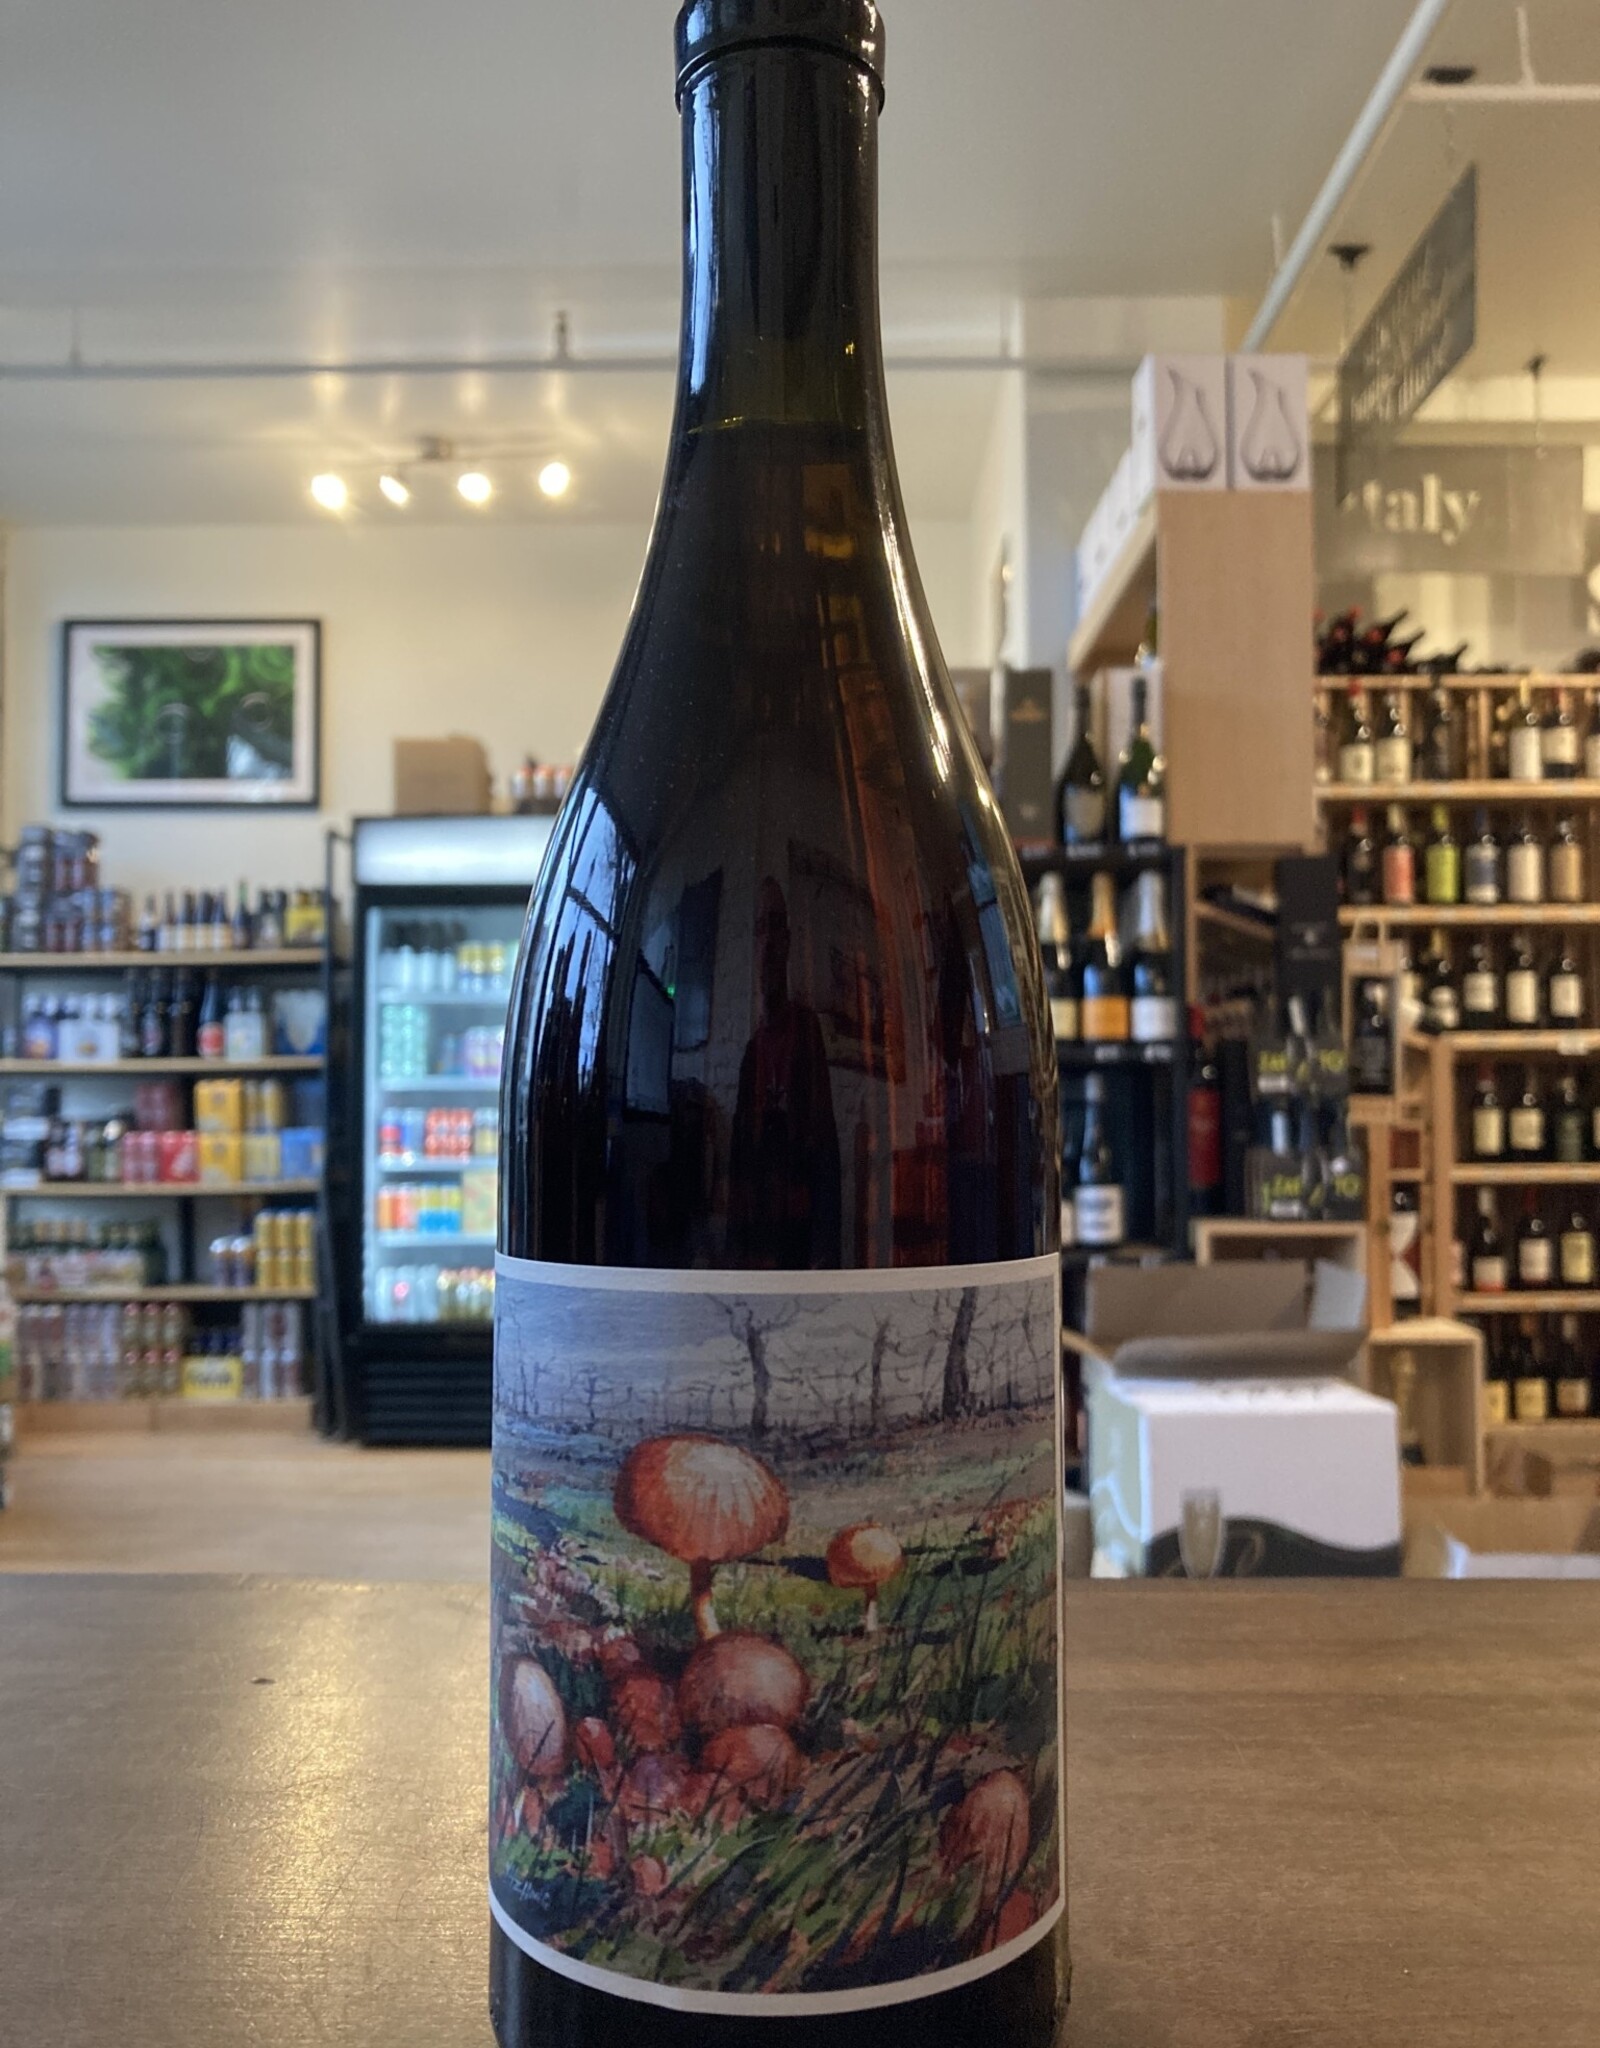 Johan Vineyards "Dreuskall" Pinot Gris 2019, Van Duzer